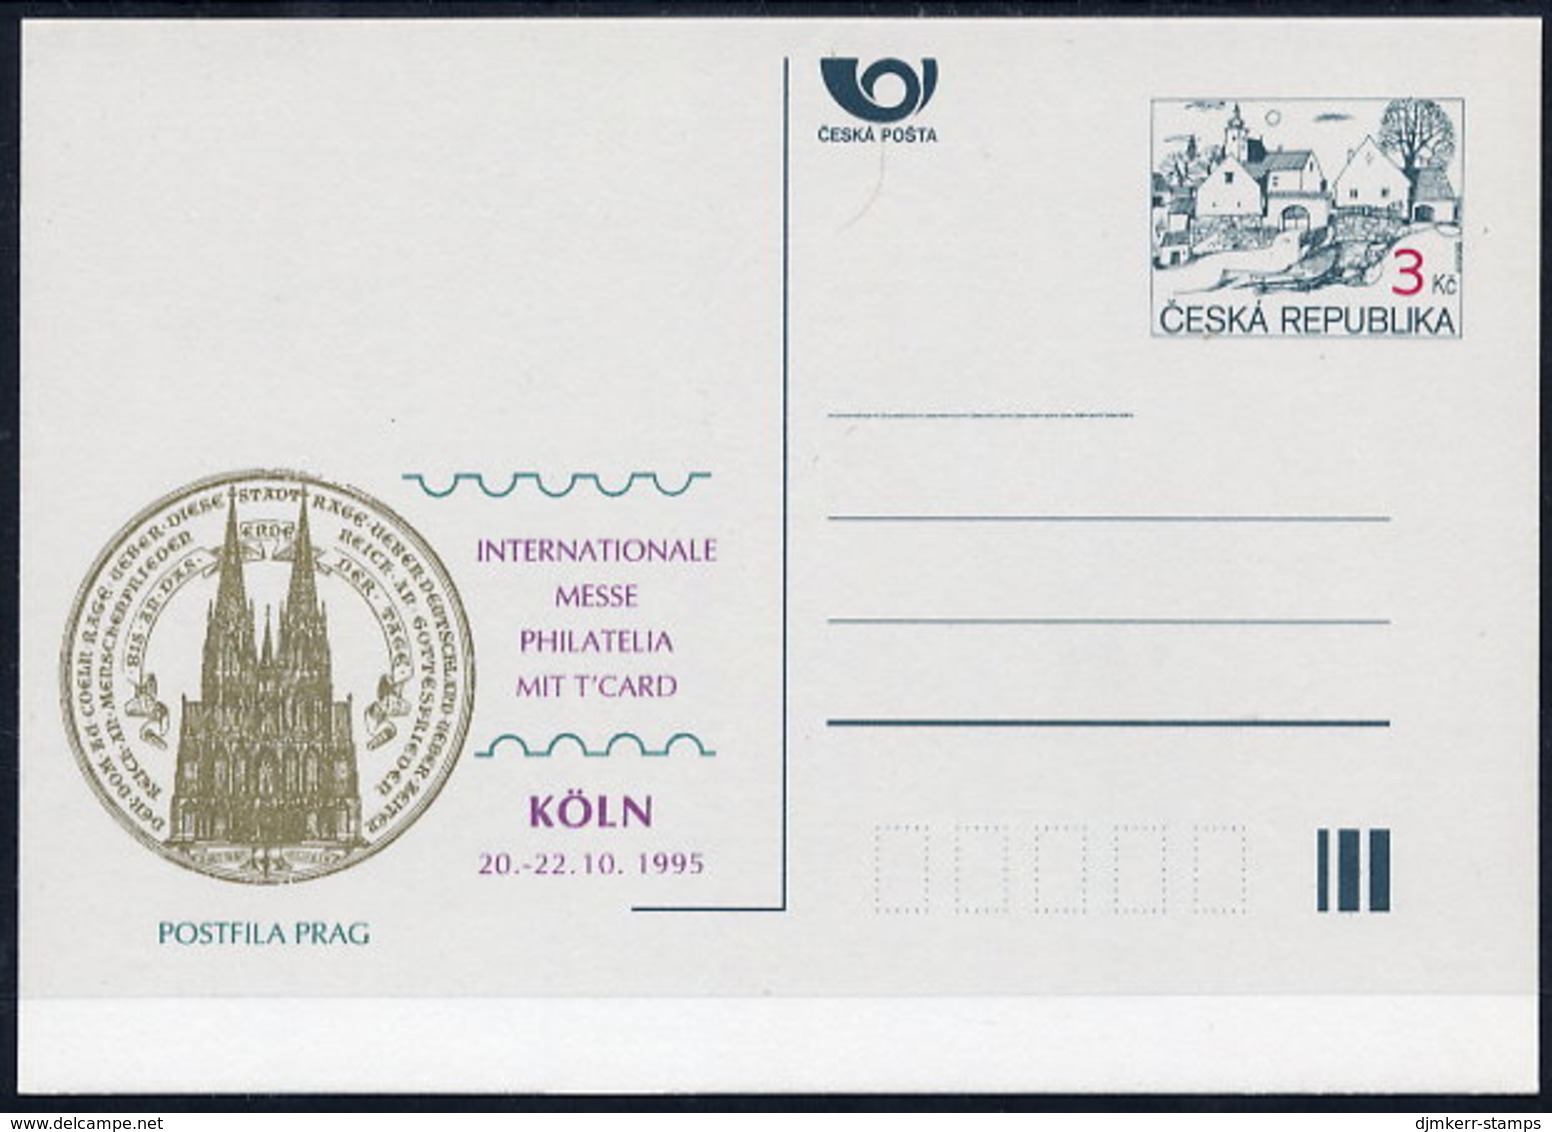 CZECH REPUBLIC 1995 3 Kc.postcard Köln '95 Unused.  Michel P7-A5 - Postcards